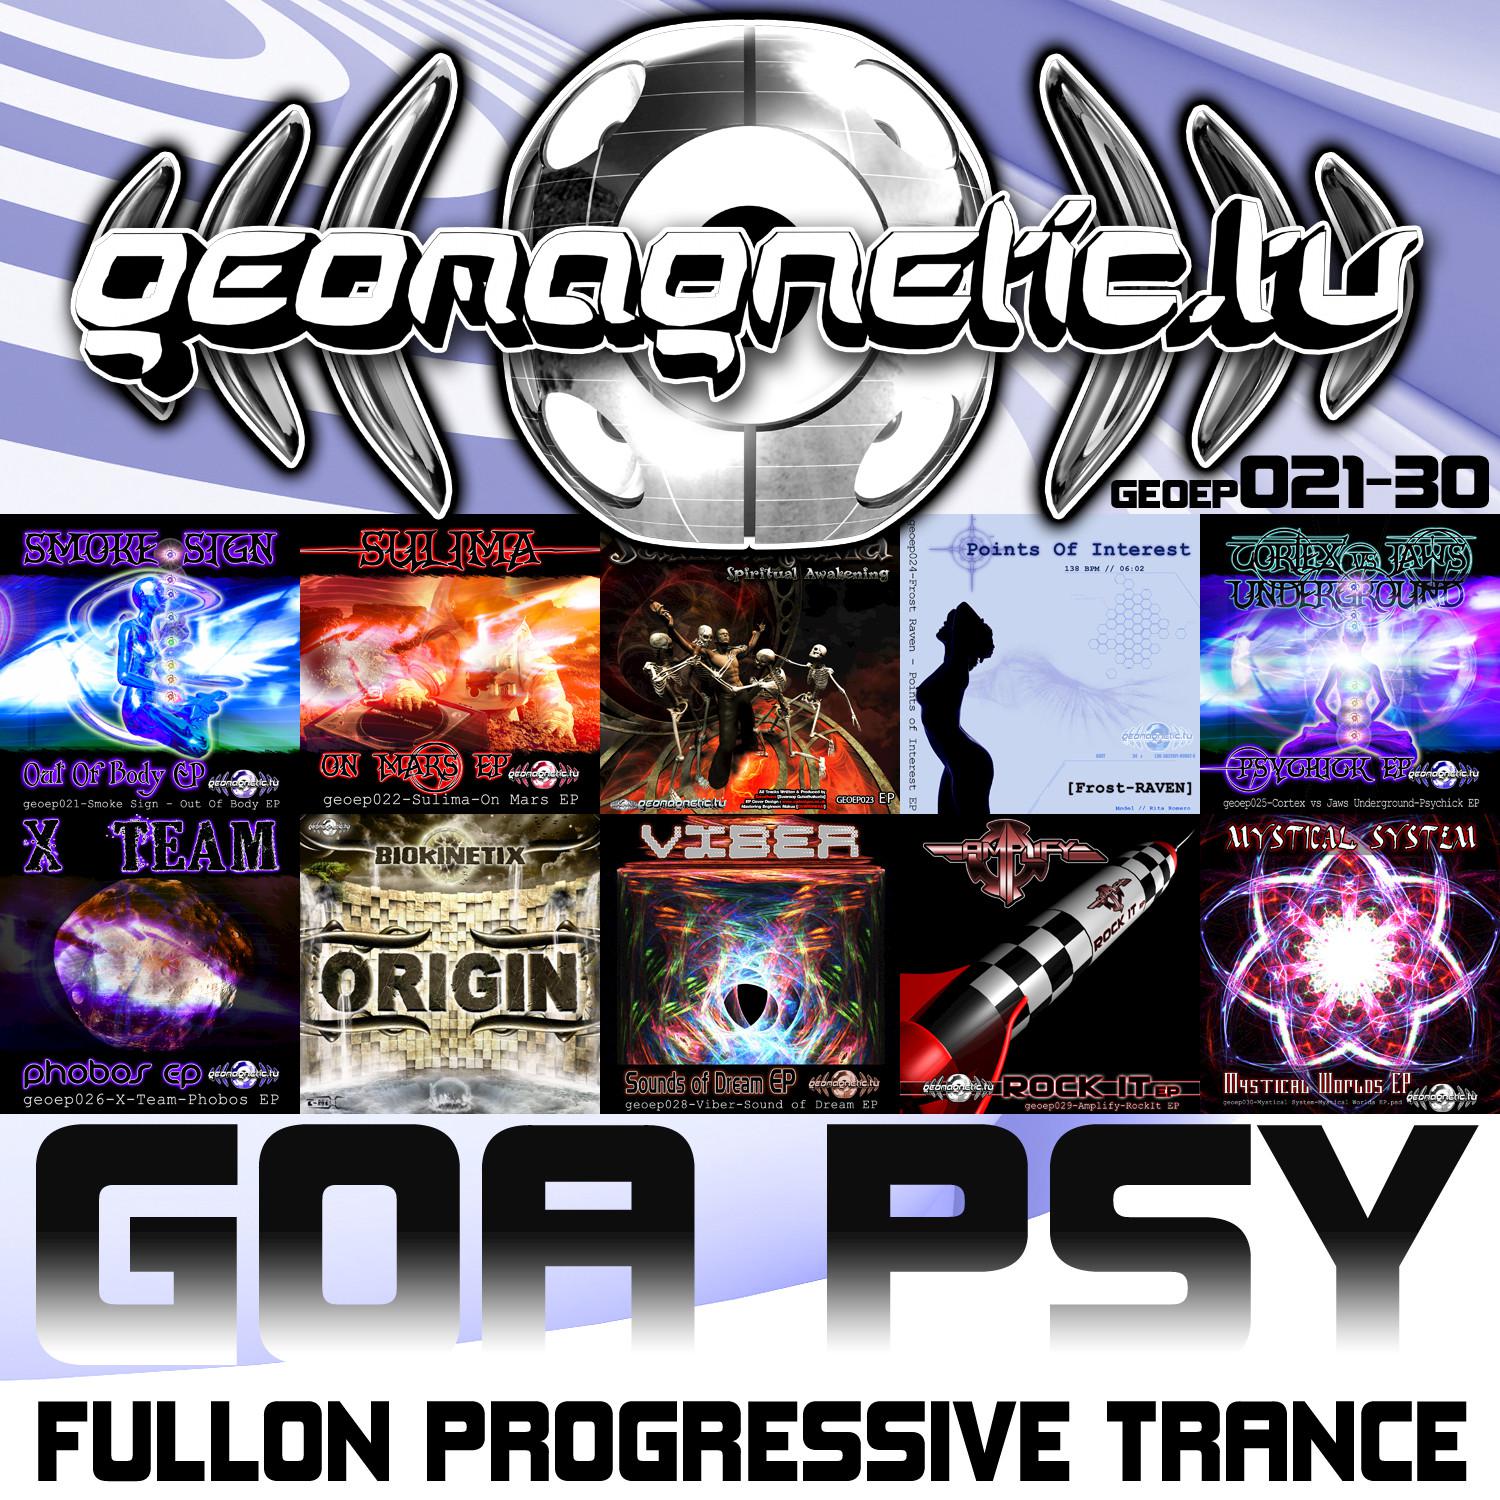 Geomagnetic Records Goa Psy Fullon Progressive Trance EP's 21 - 30